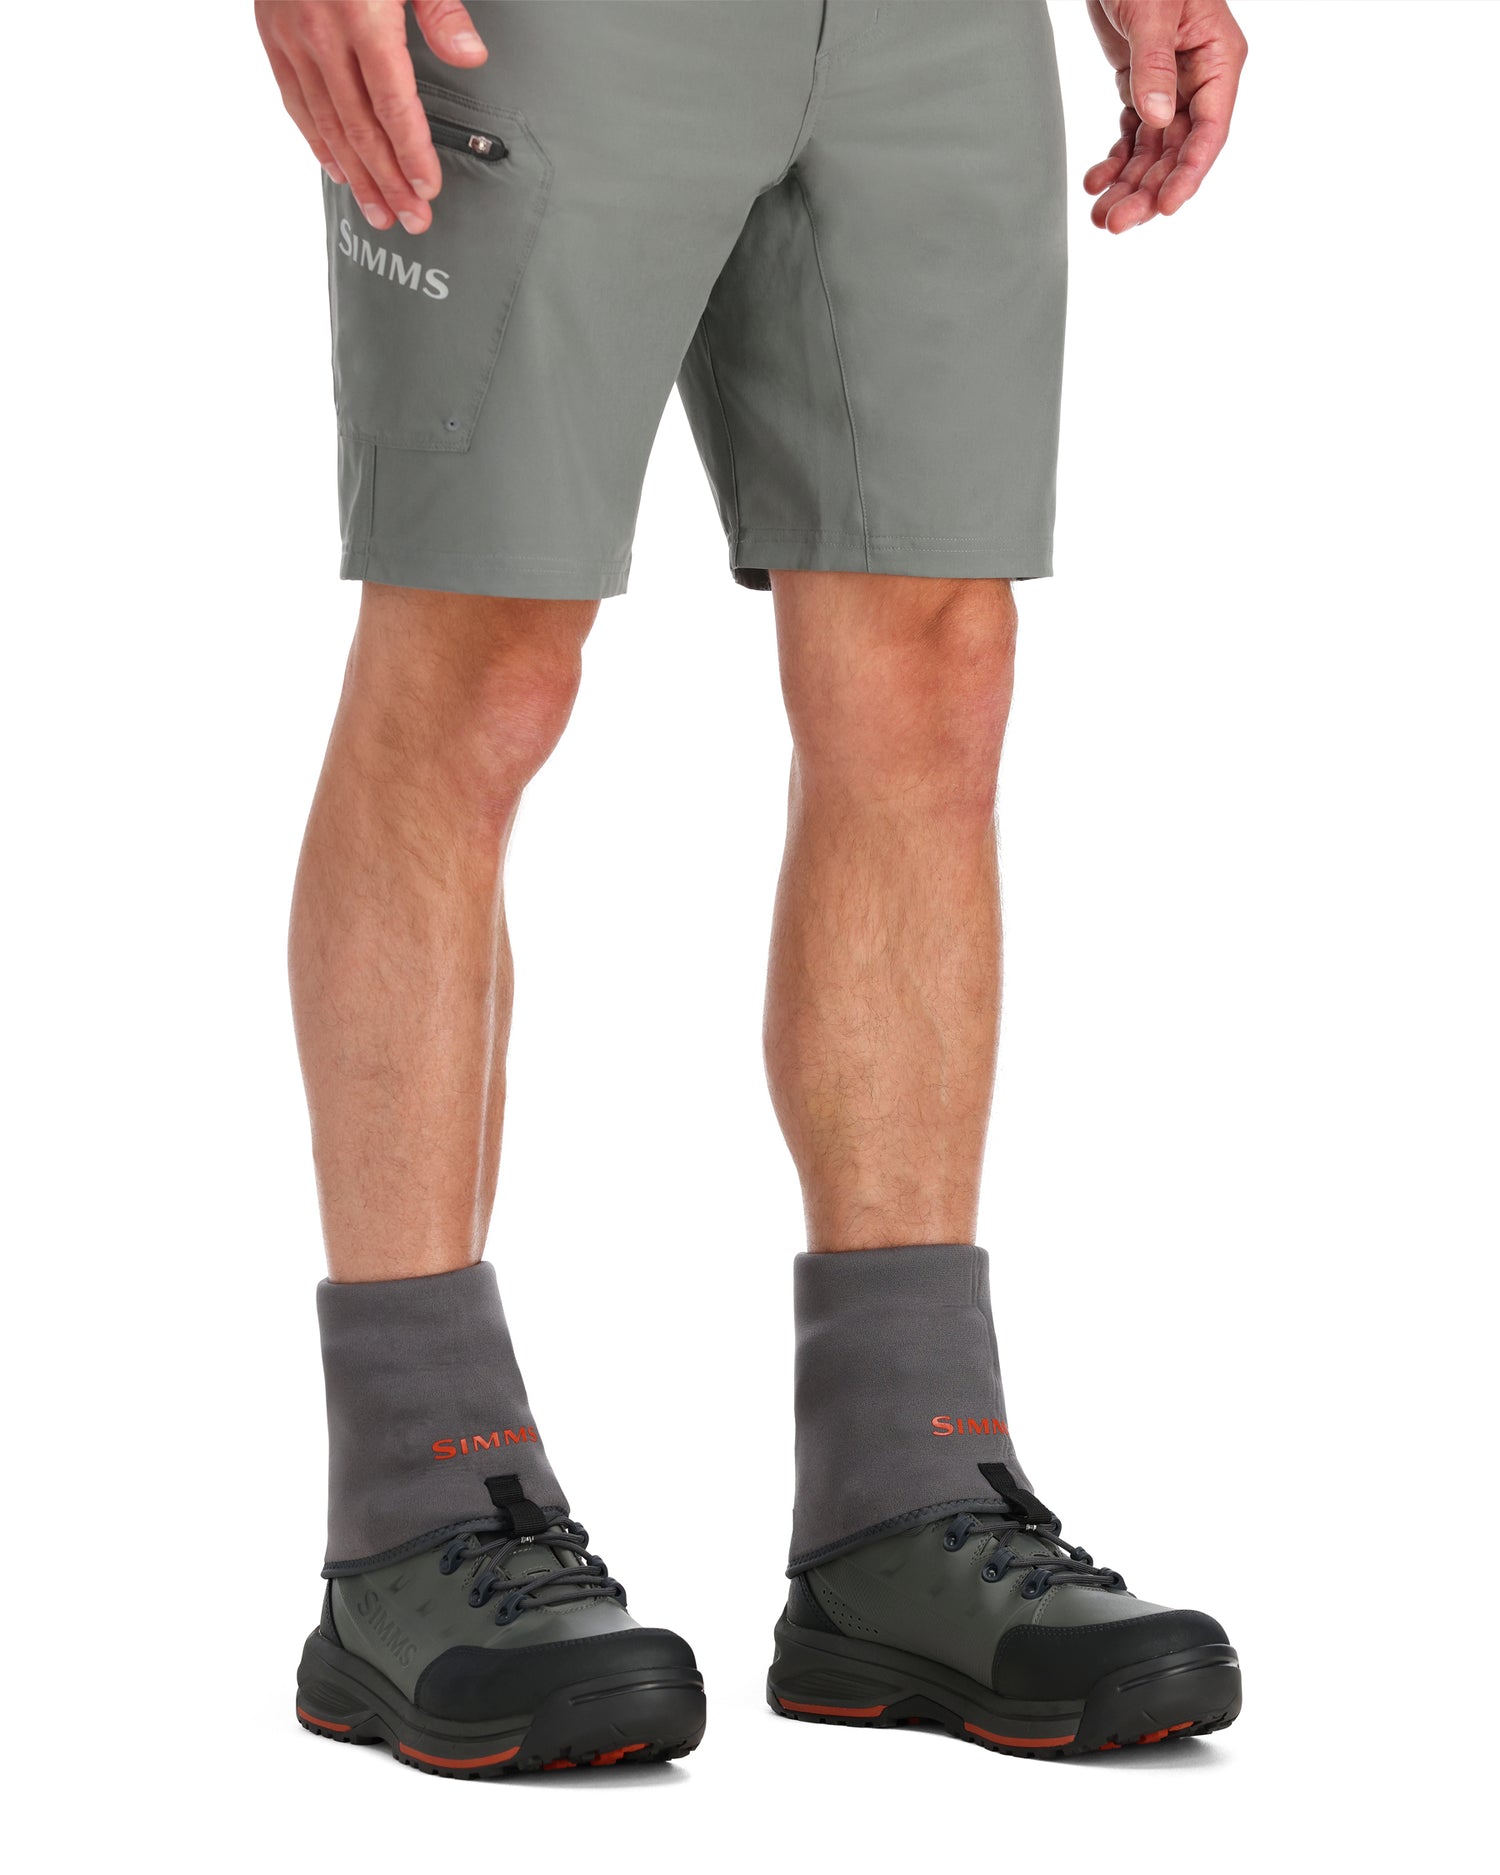 13503-025-guide-guard-socks-Model